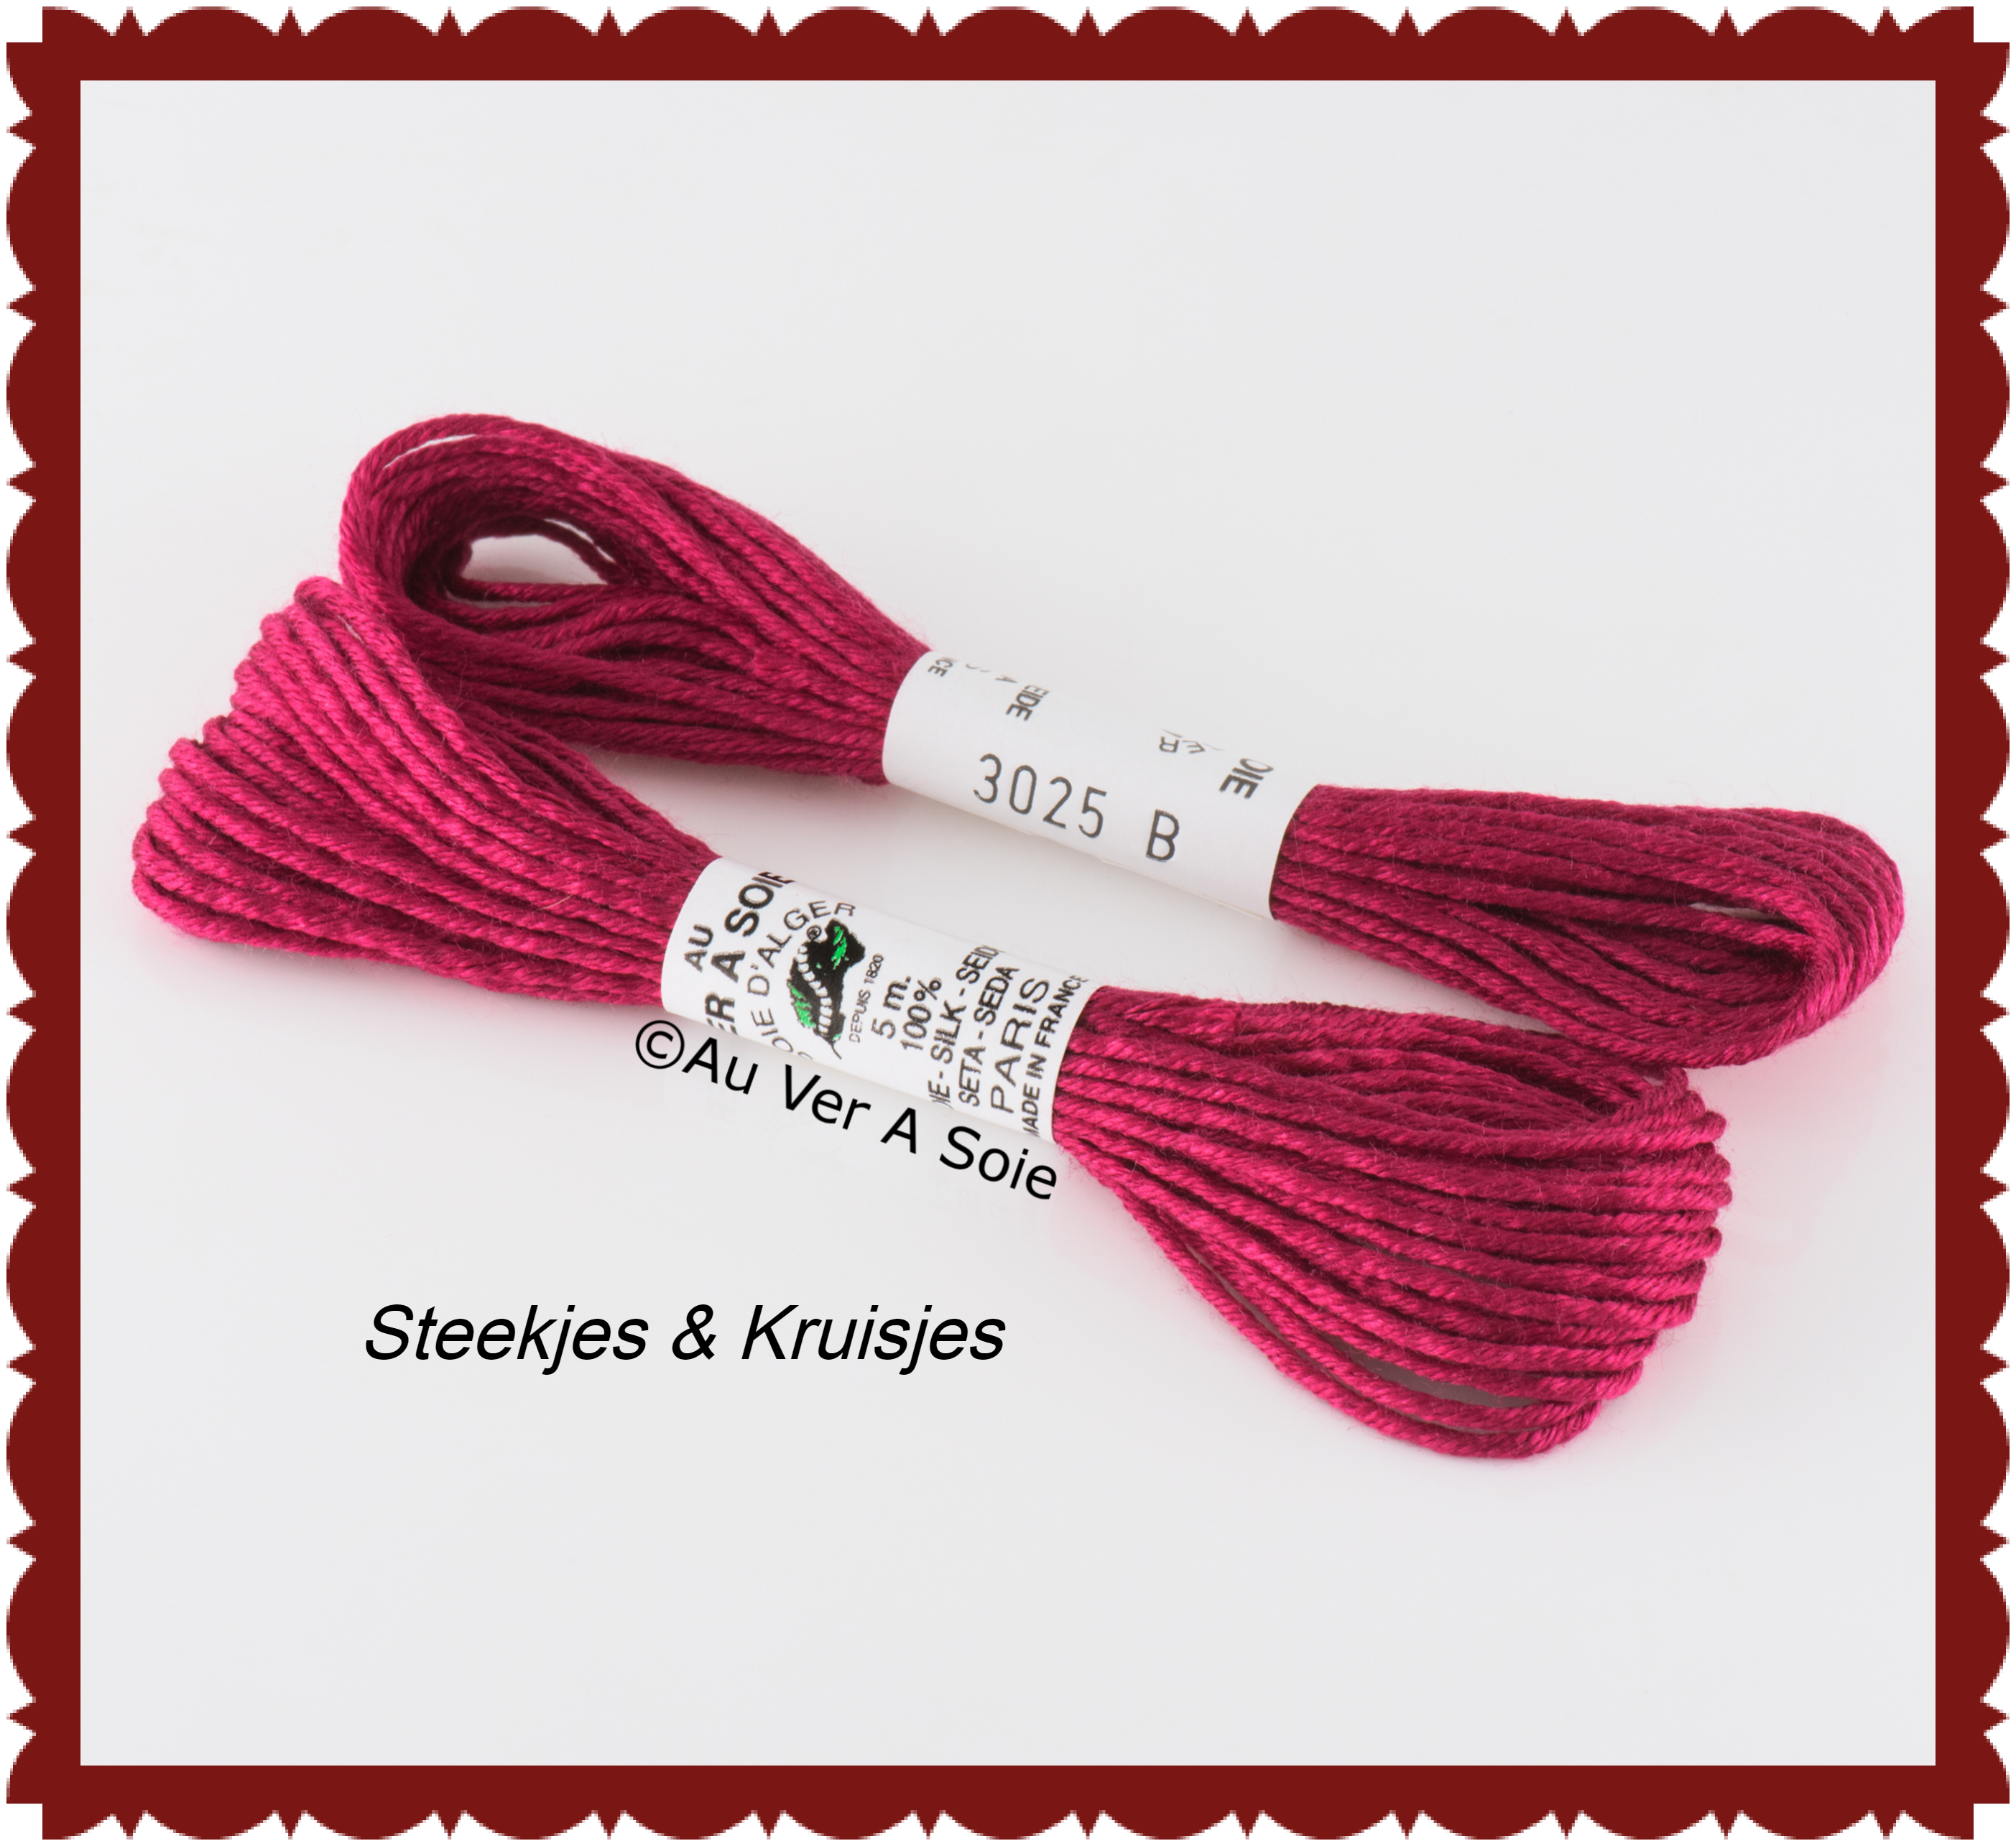 Au ver ie "soie d'alger" silk yarn color no. 3341